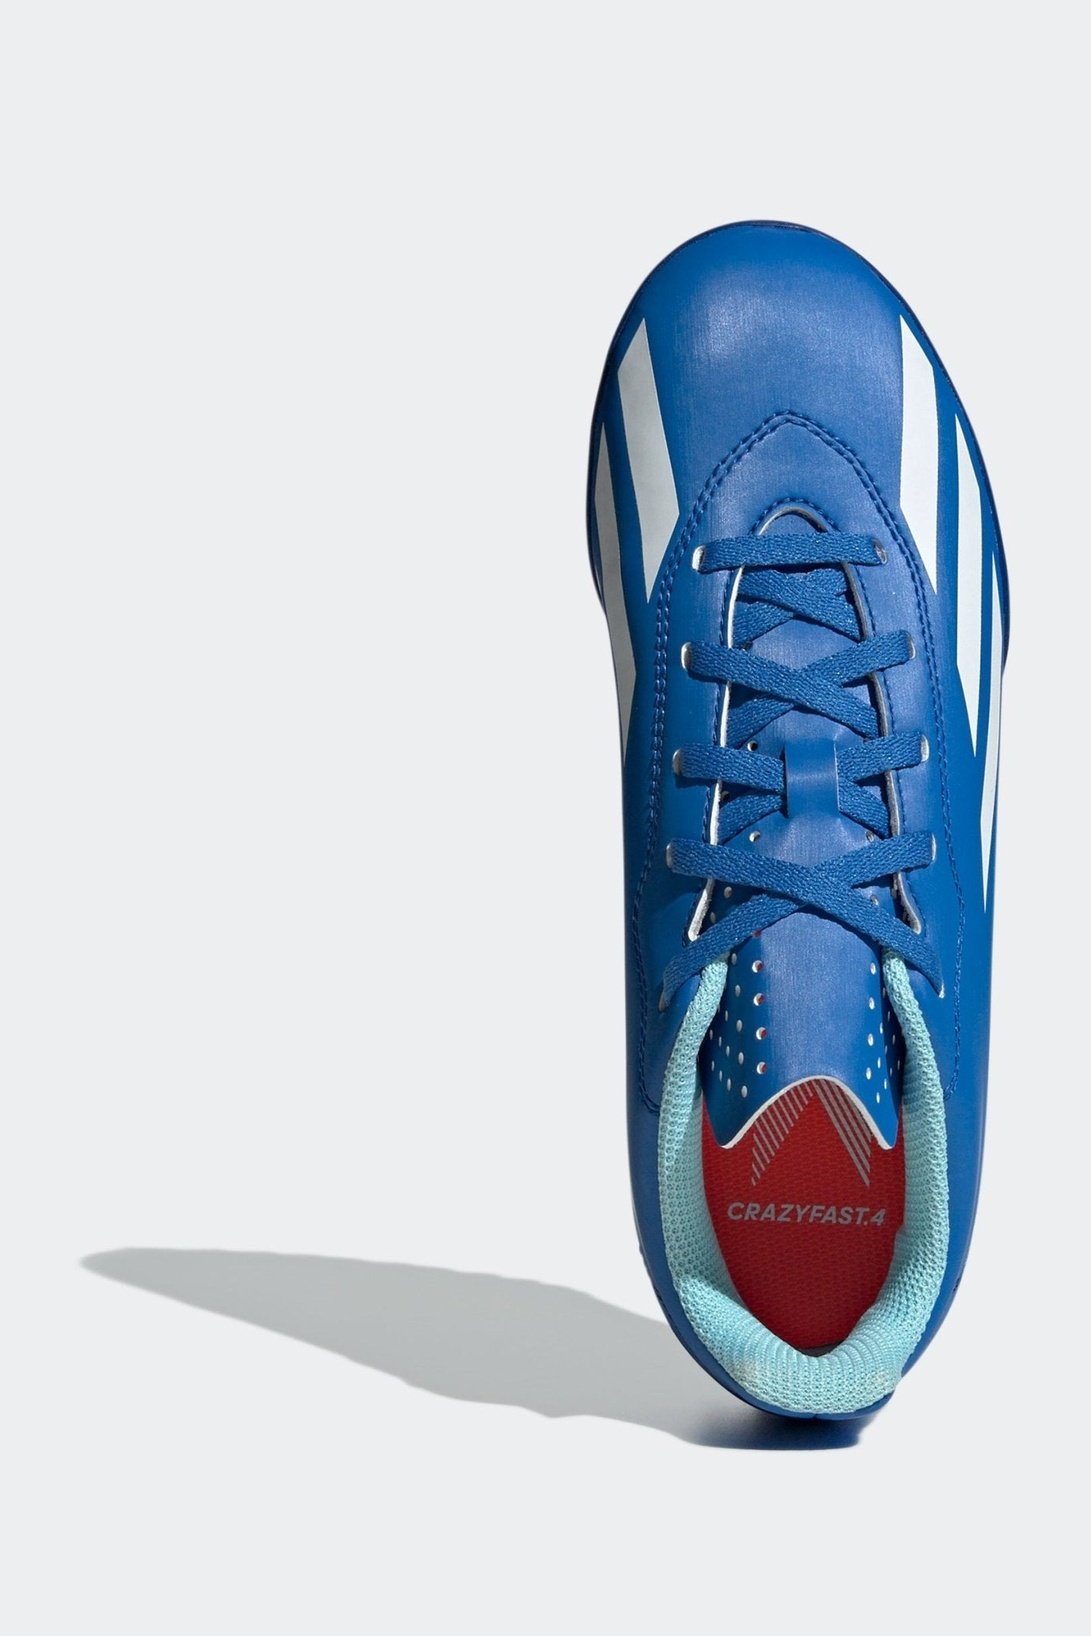 ADIDAS - נעלי קטרגל לנוער X CRAZYFAST.4 בצבע כחול - MASHBIR//365